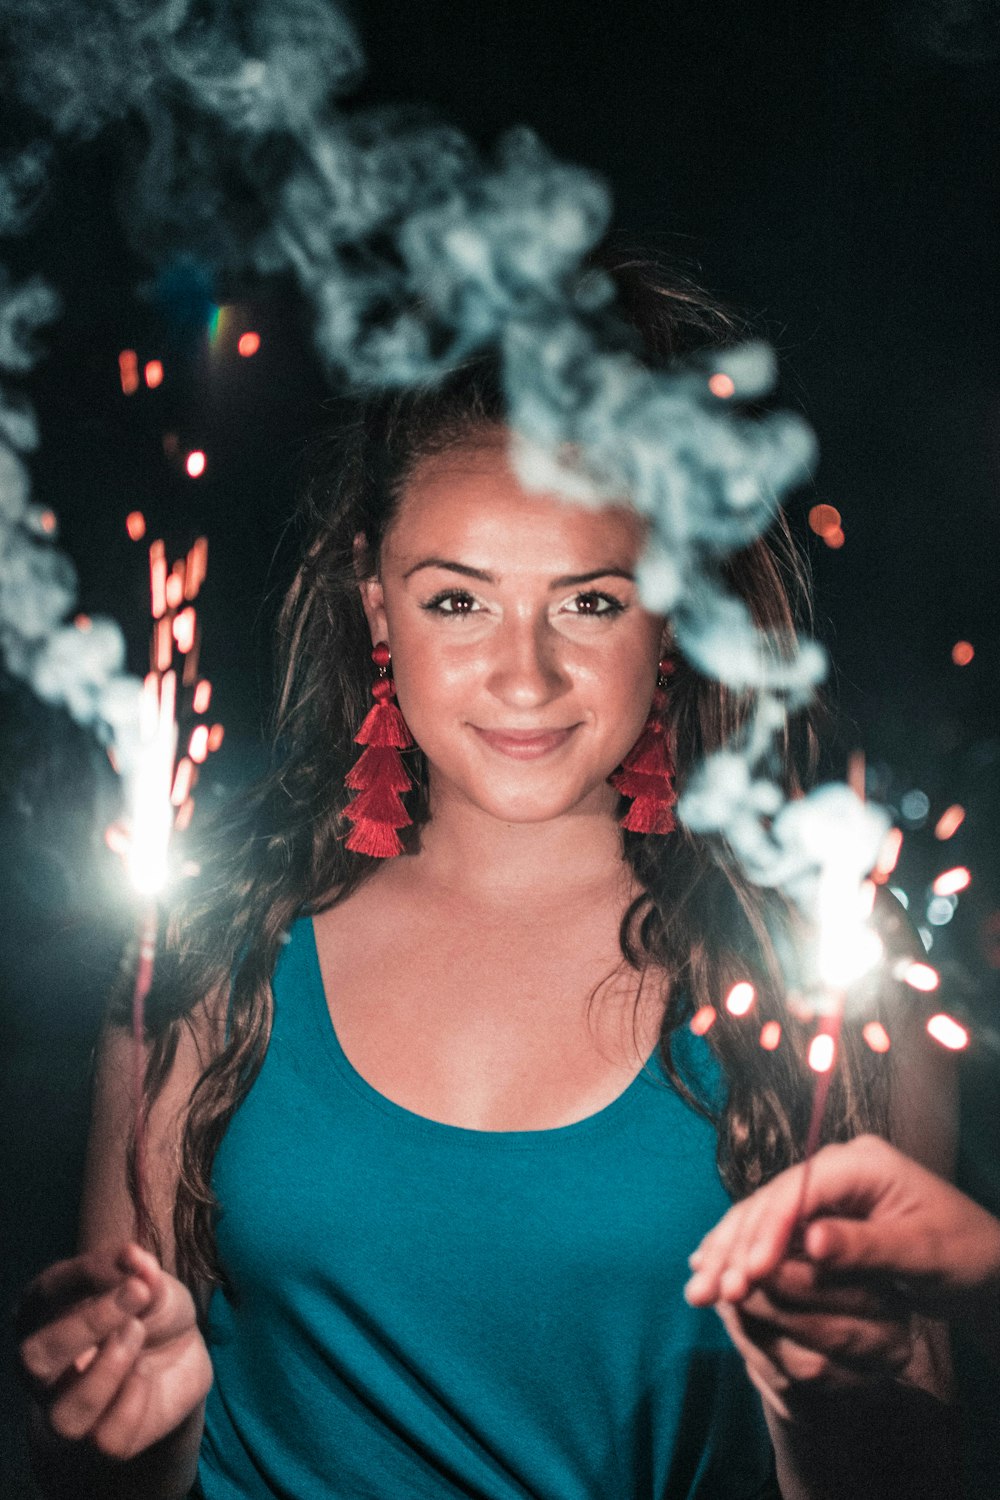 woman holding lighted sparkler taken during night time